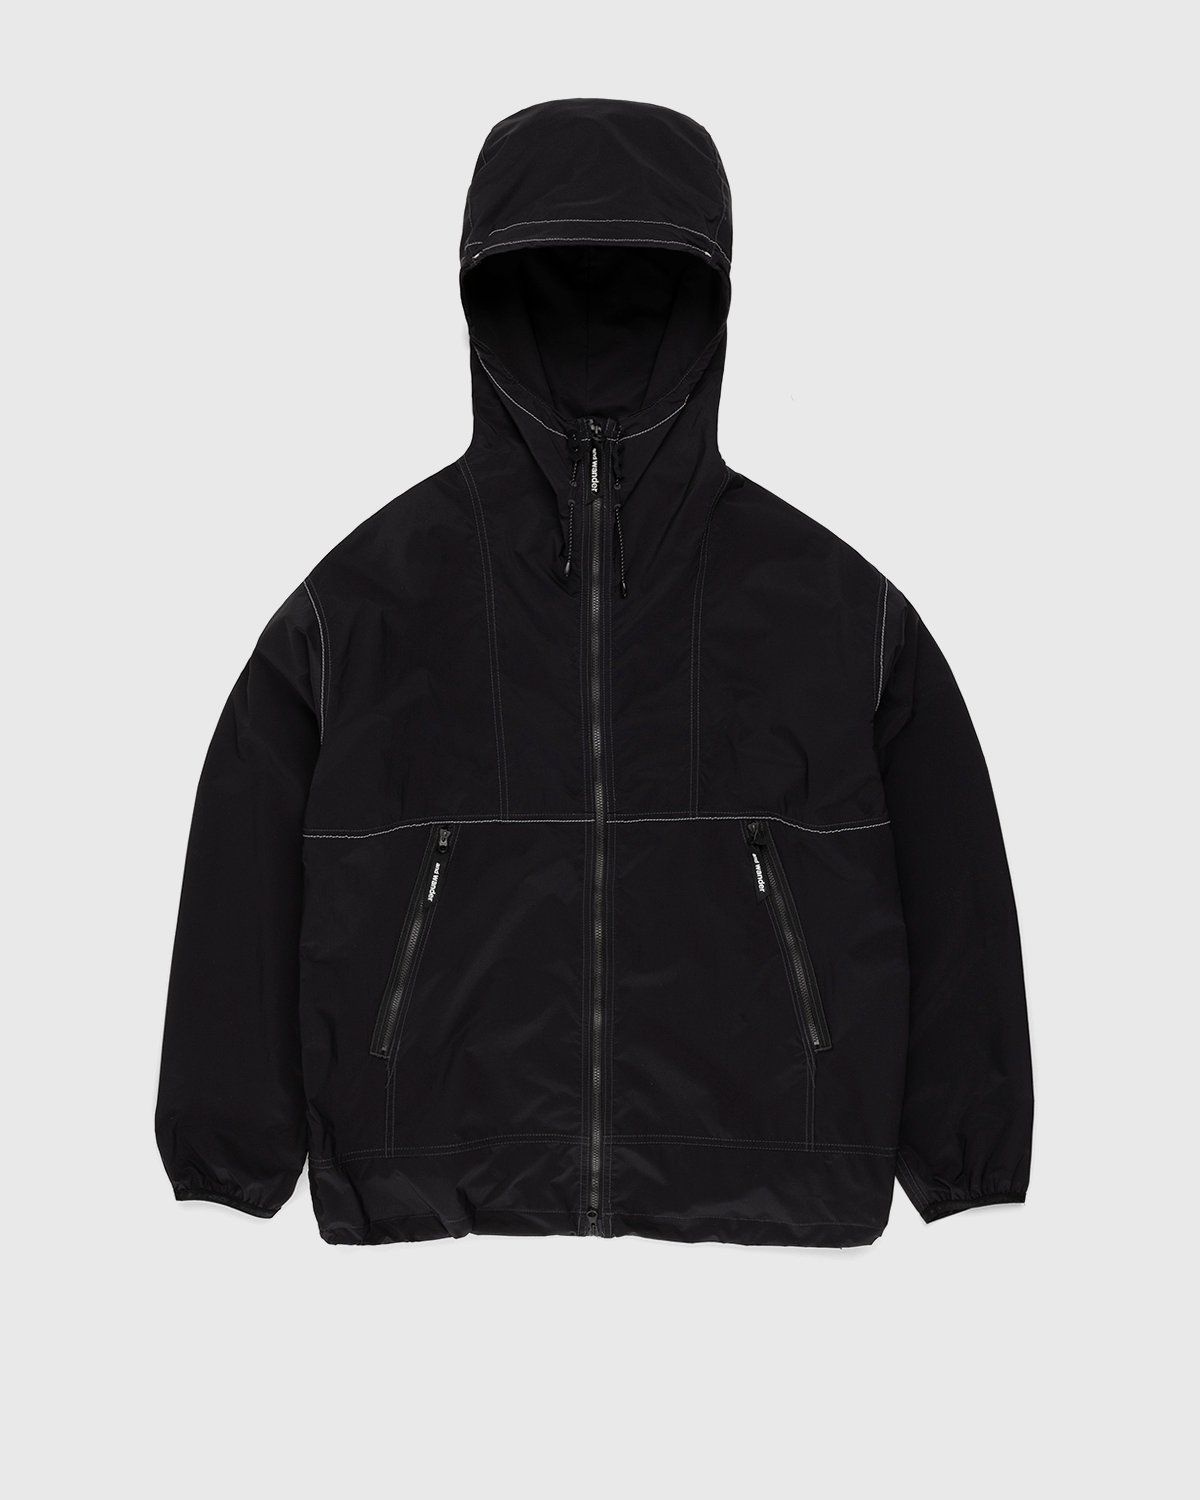 And Wander – Pertex Wind Jacket Black - Outerwear - Black - Image 1